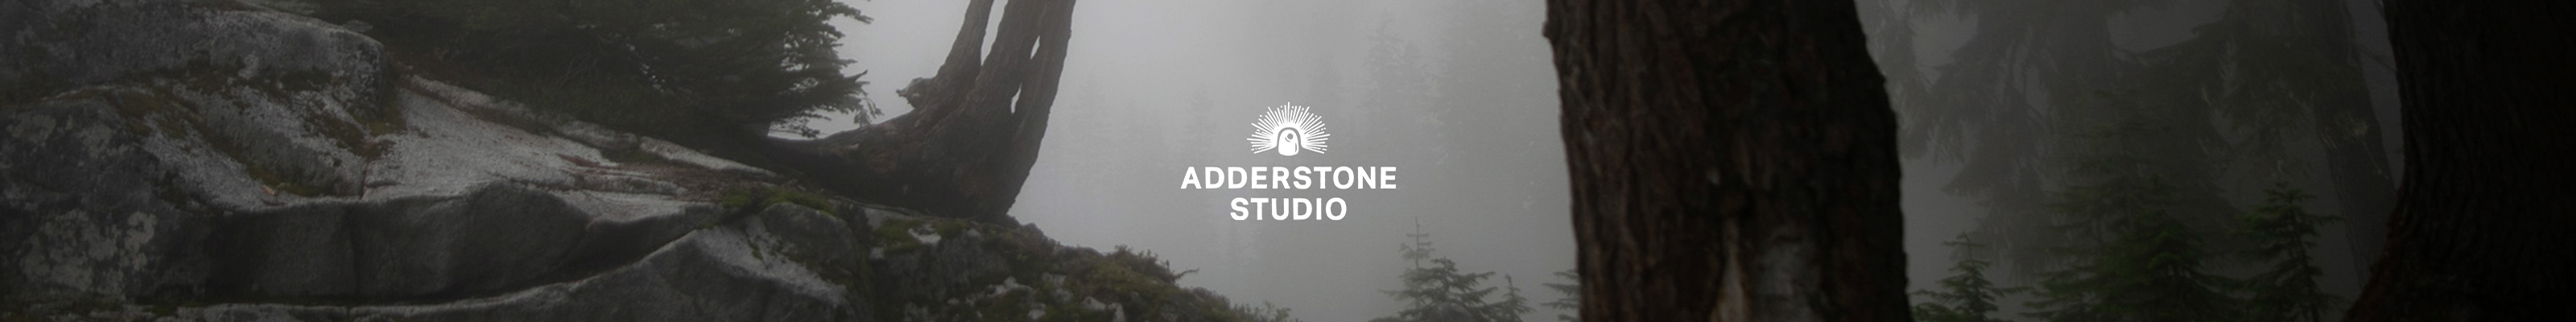 Adderstone Studios profilbanner